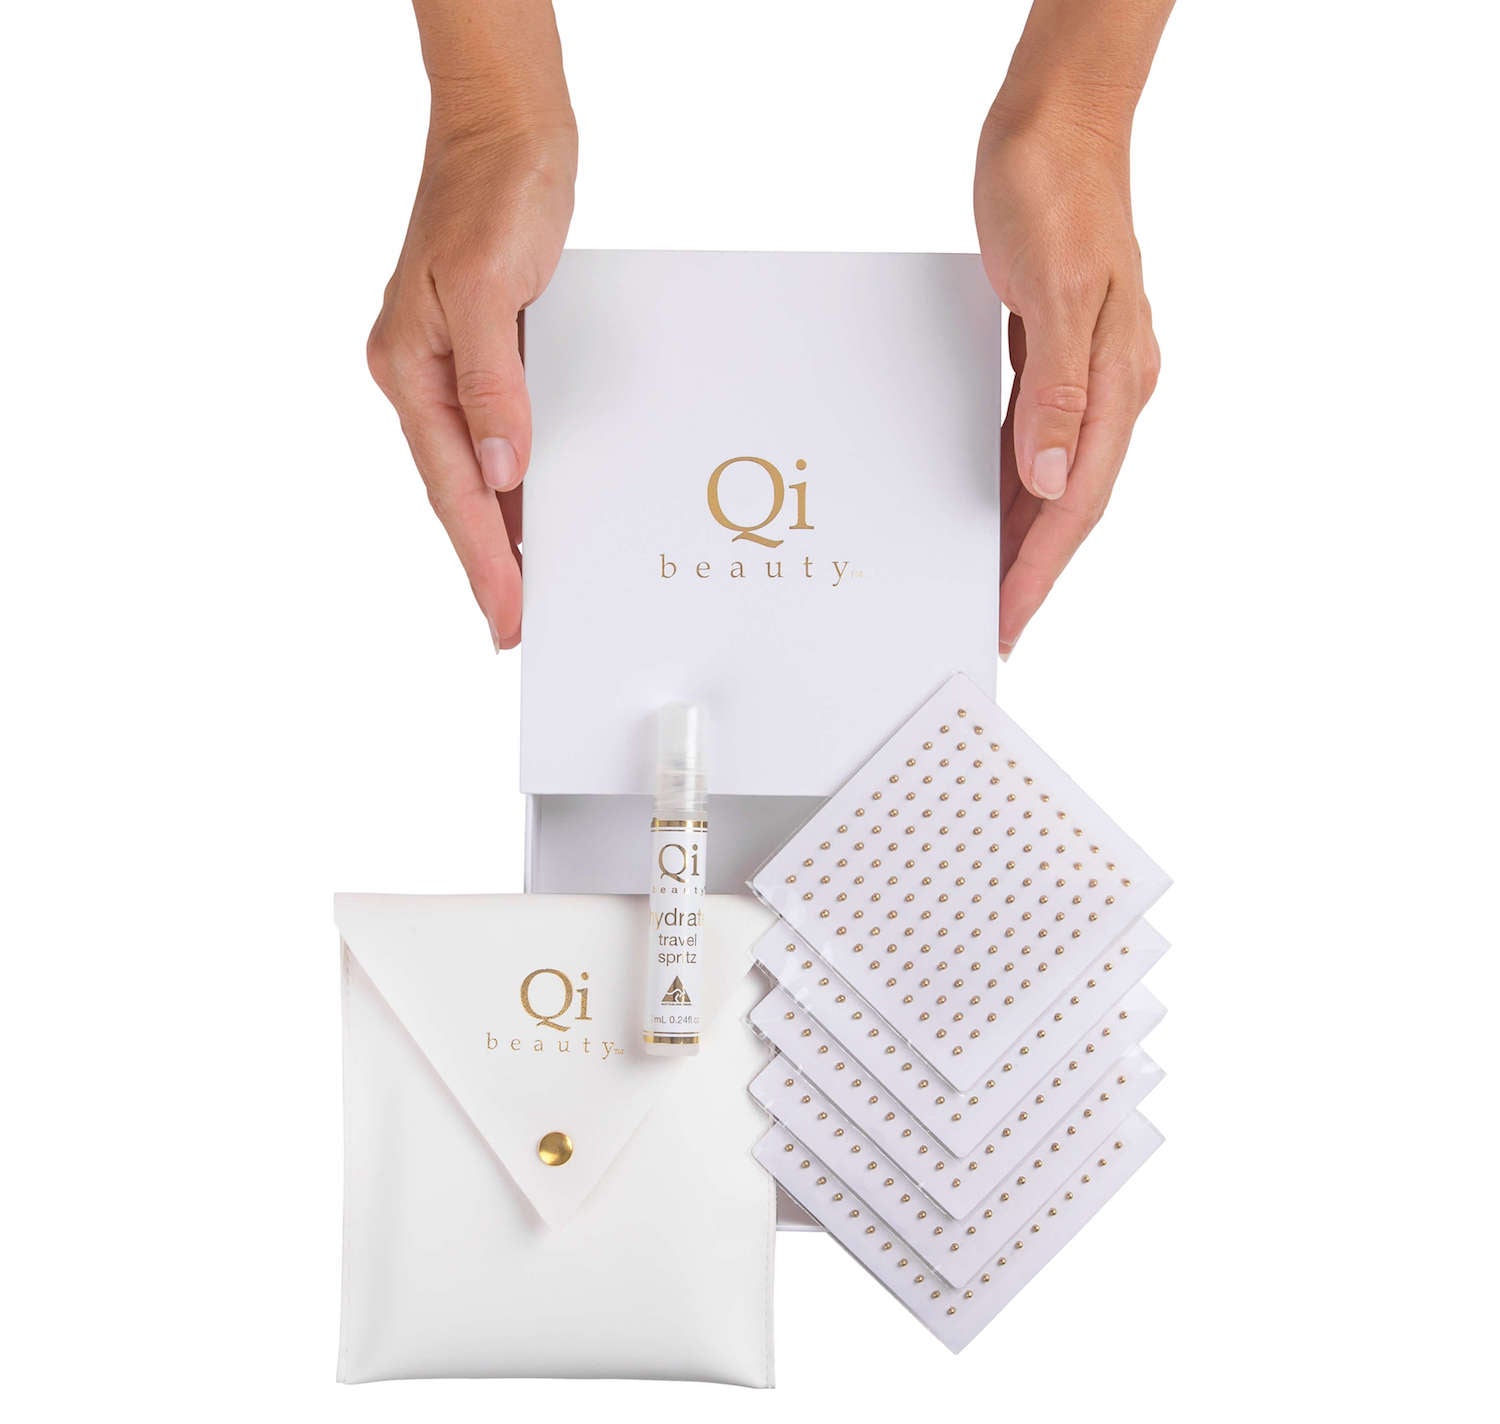 Qi beauty home kit